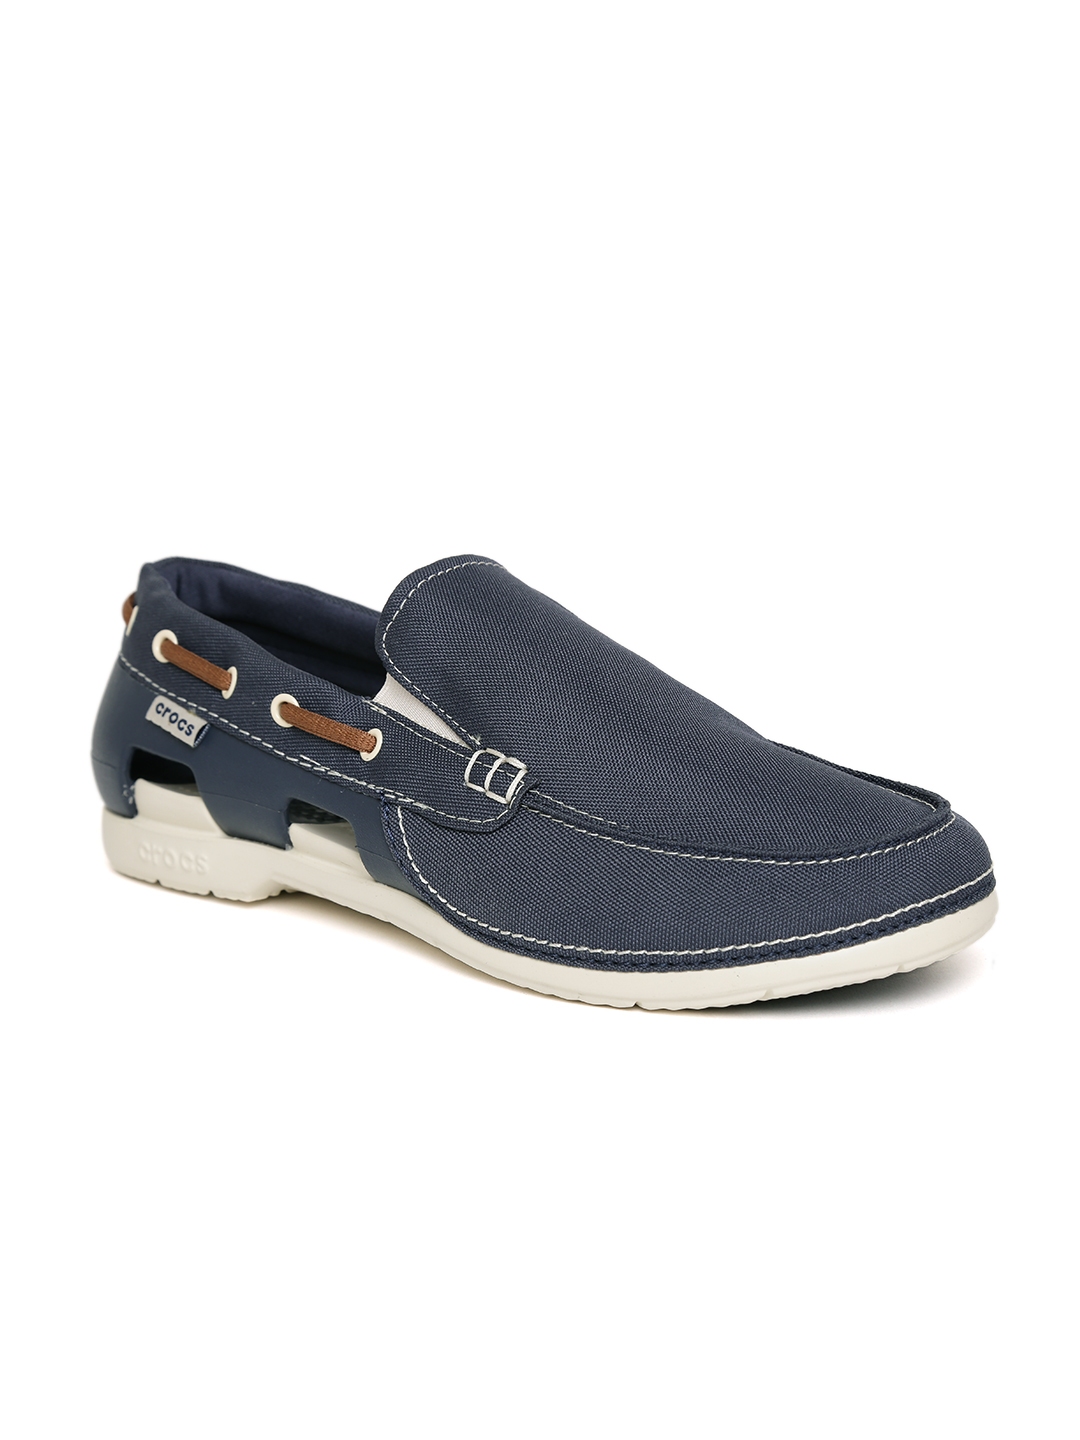 Buy Crocs Men Navy Blue Slip On Sneakers - Casual Shoes for Men 2420898 ...